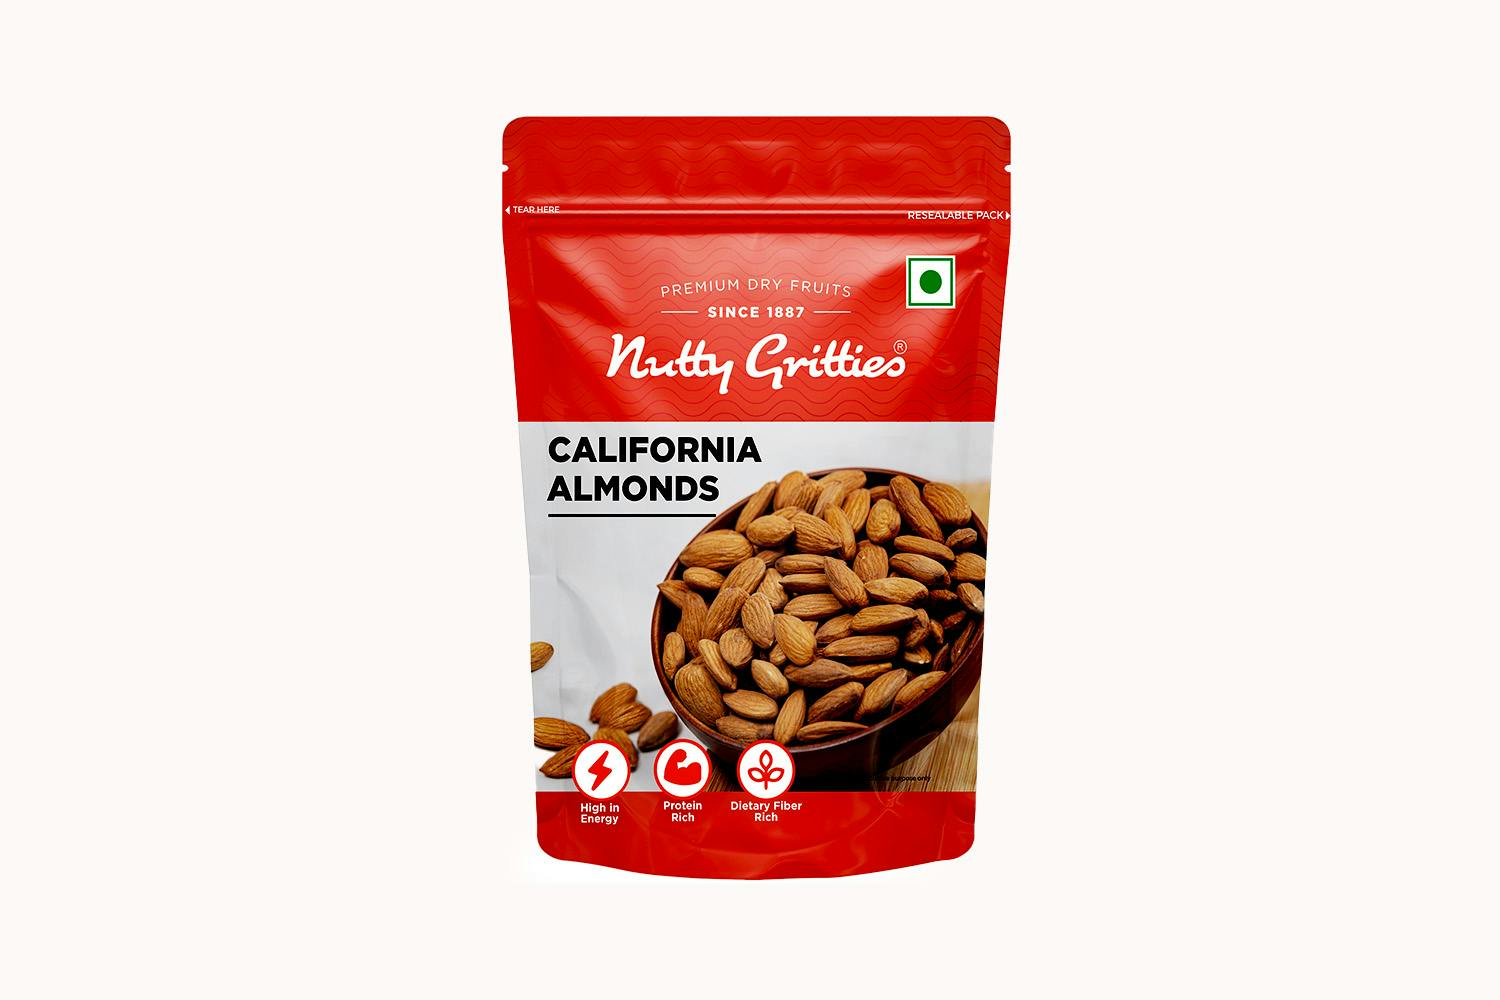 Nutty Gritties Jumbo California Almonds